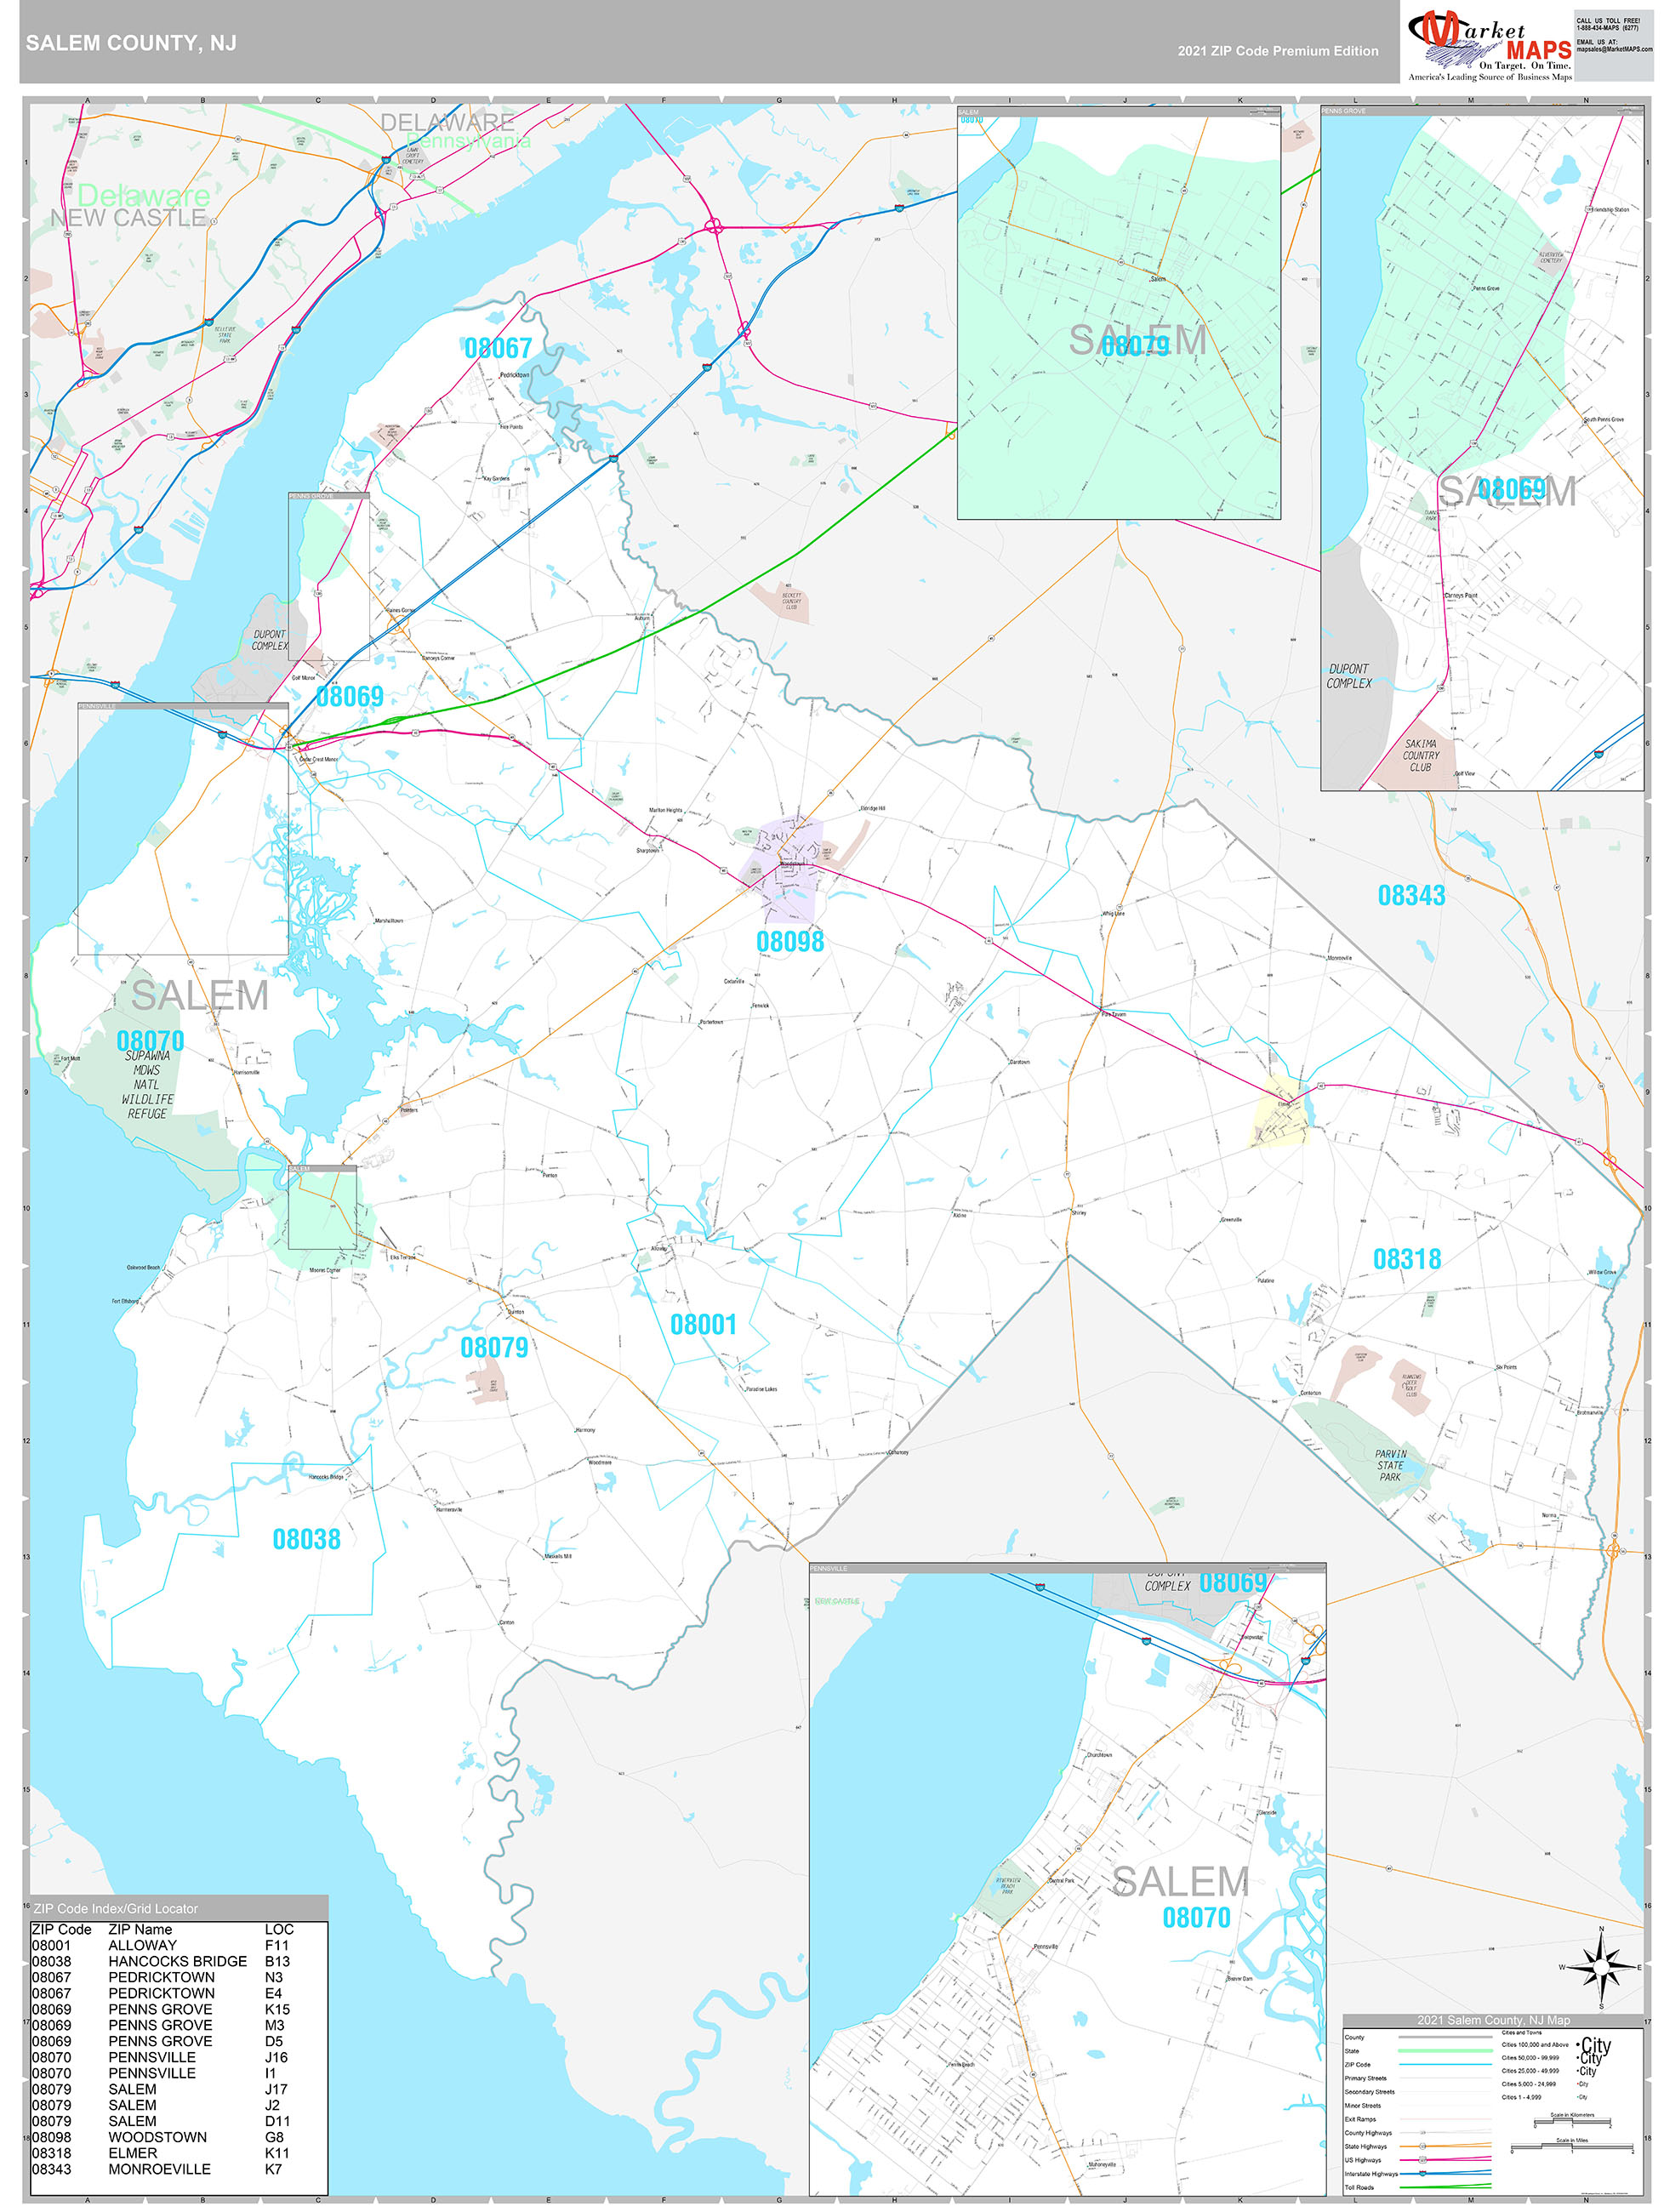 Salem County, NJ Wall Map Premium Style by MarketMAPS